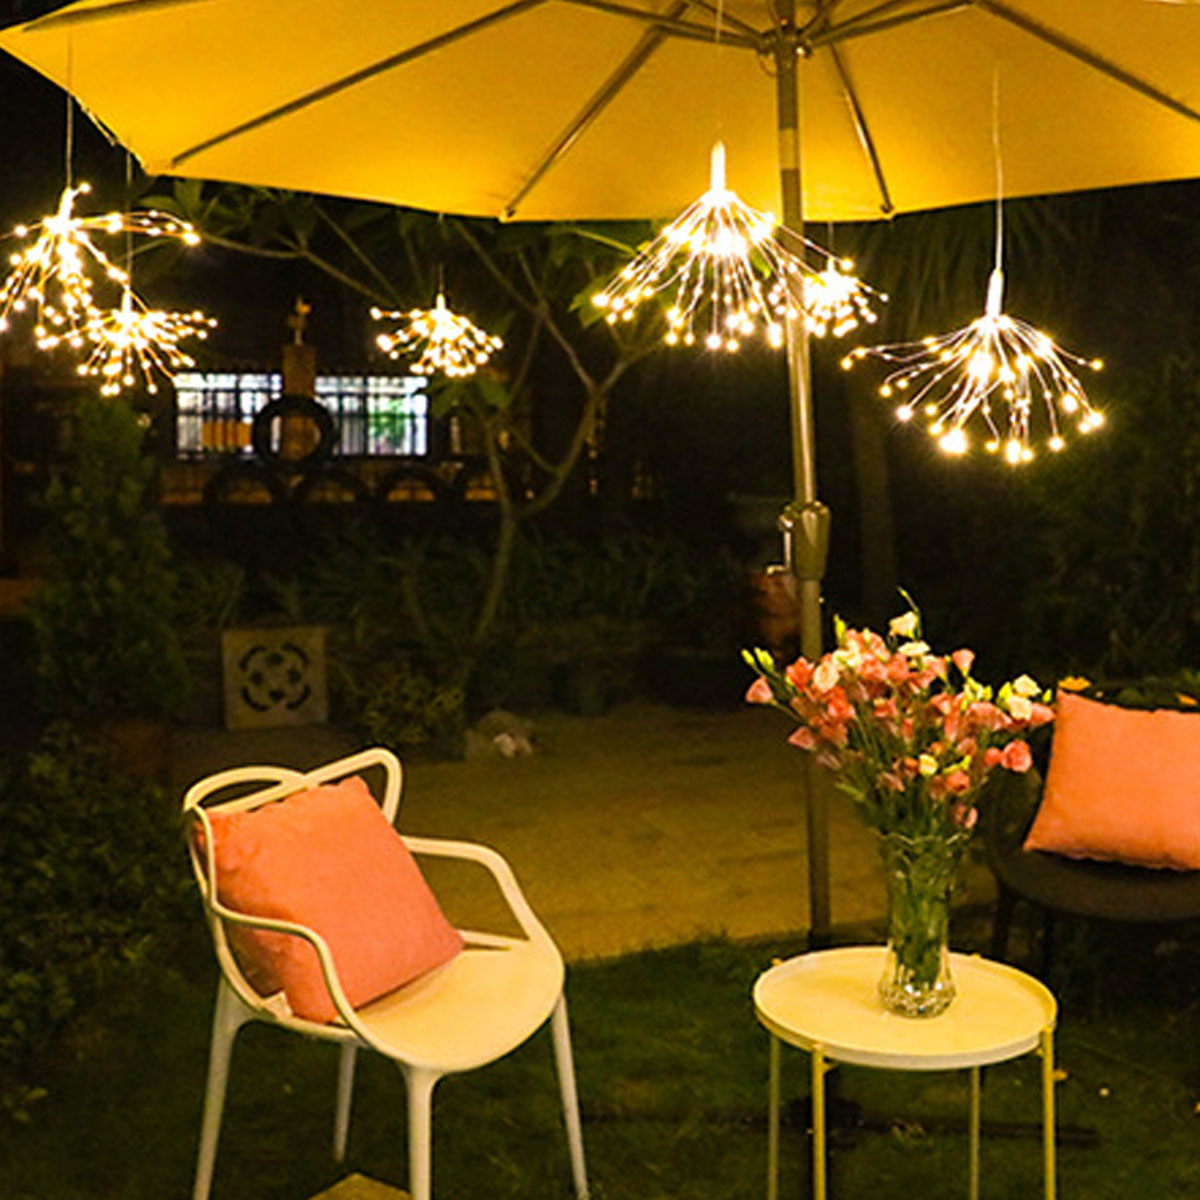 DIY-Starburst-Fairy-Solar-String-lights-for-Garden-Decoration-Bouquet-LED-String-Christmas-Festive-l-1722183-4